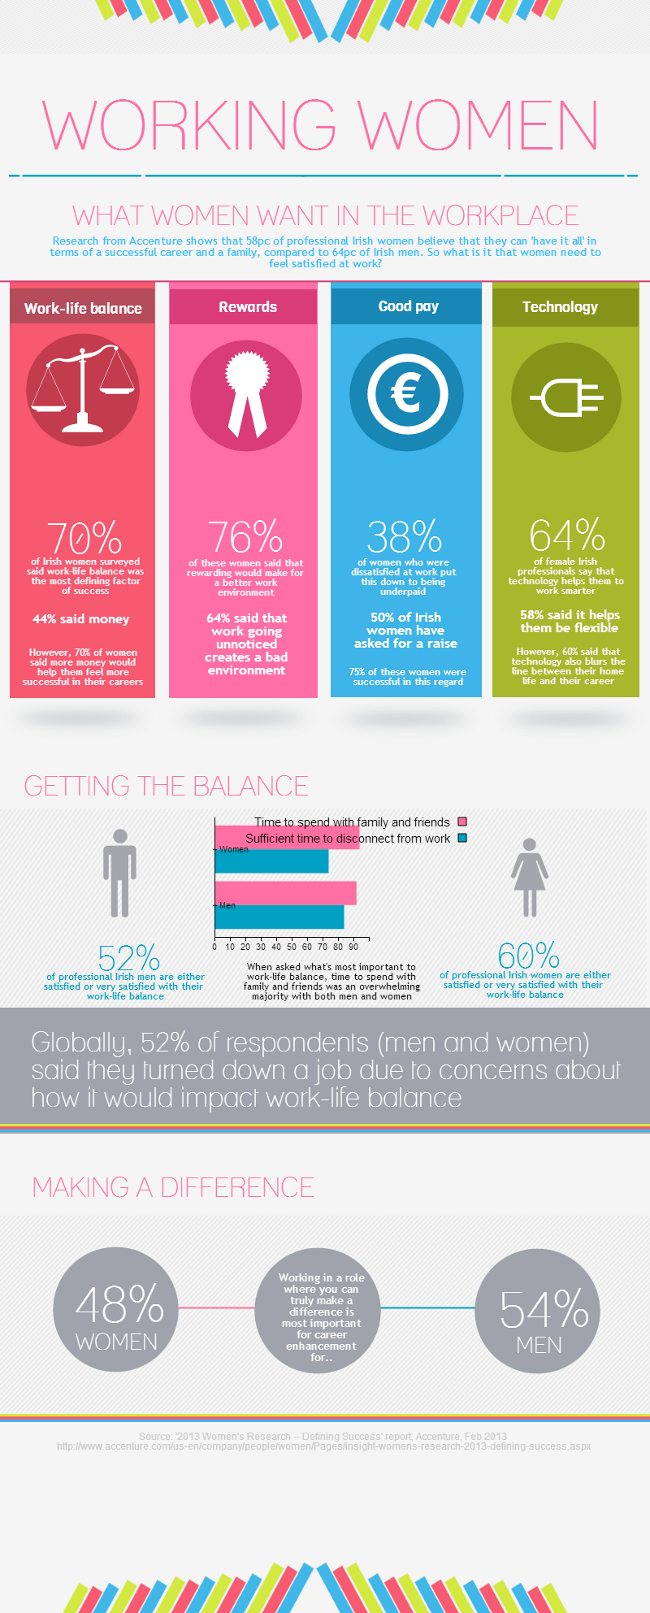 Working Women infographic (Accenture research statistics)